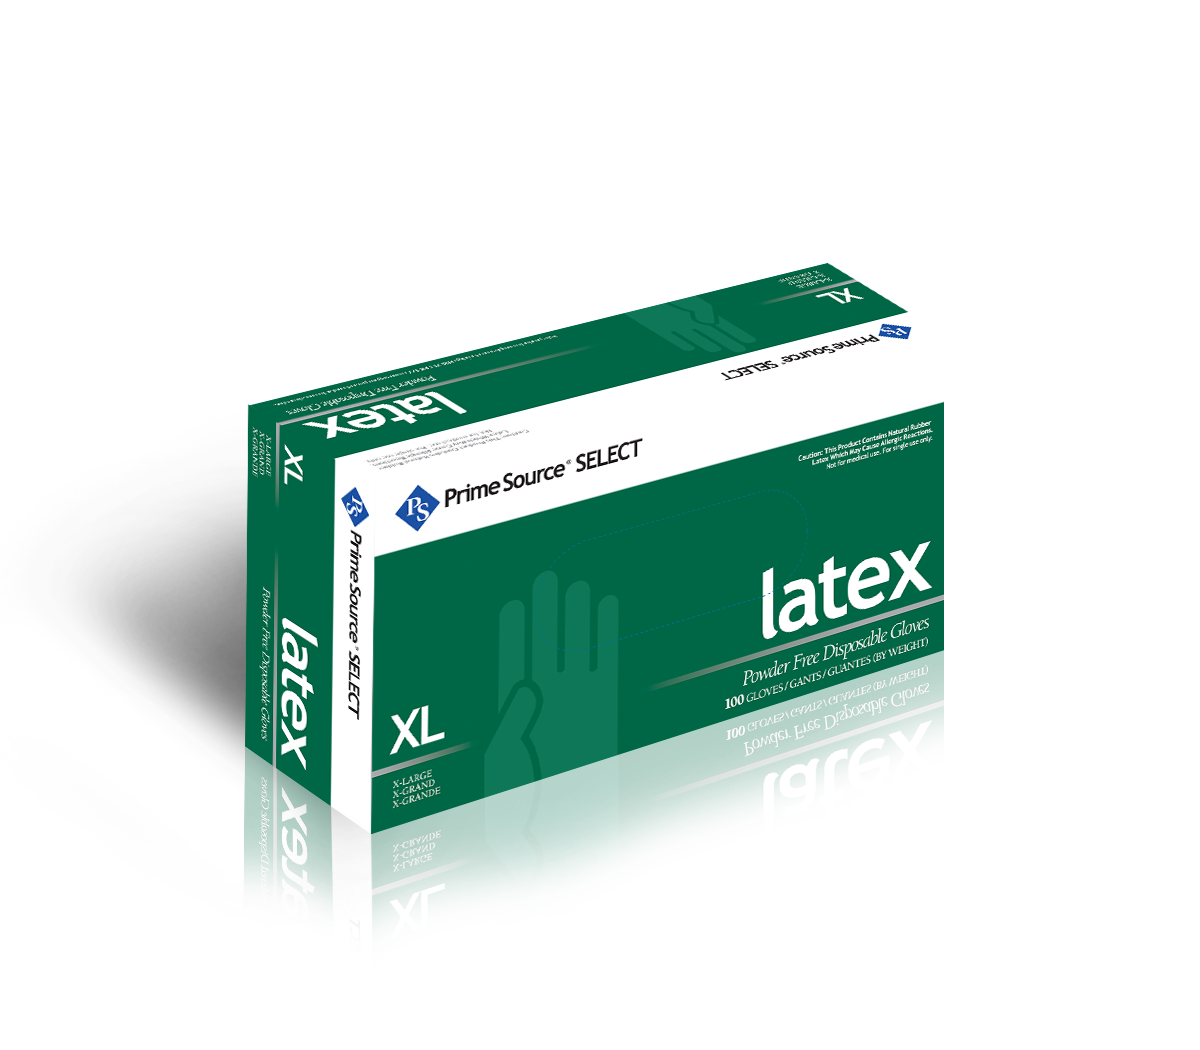 XL LIGHT POWDERD LATEX GLOVE,  PRIMESOURCE SELECT 100/BOX